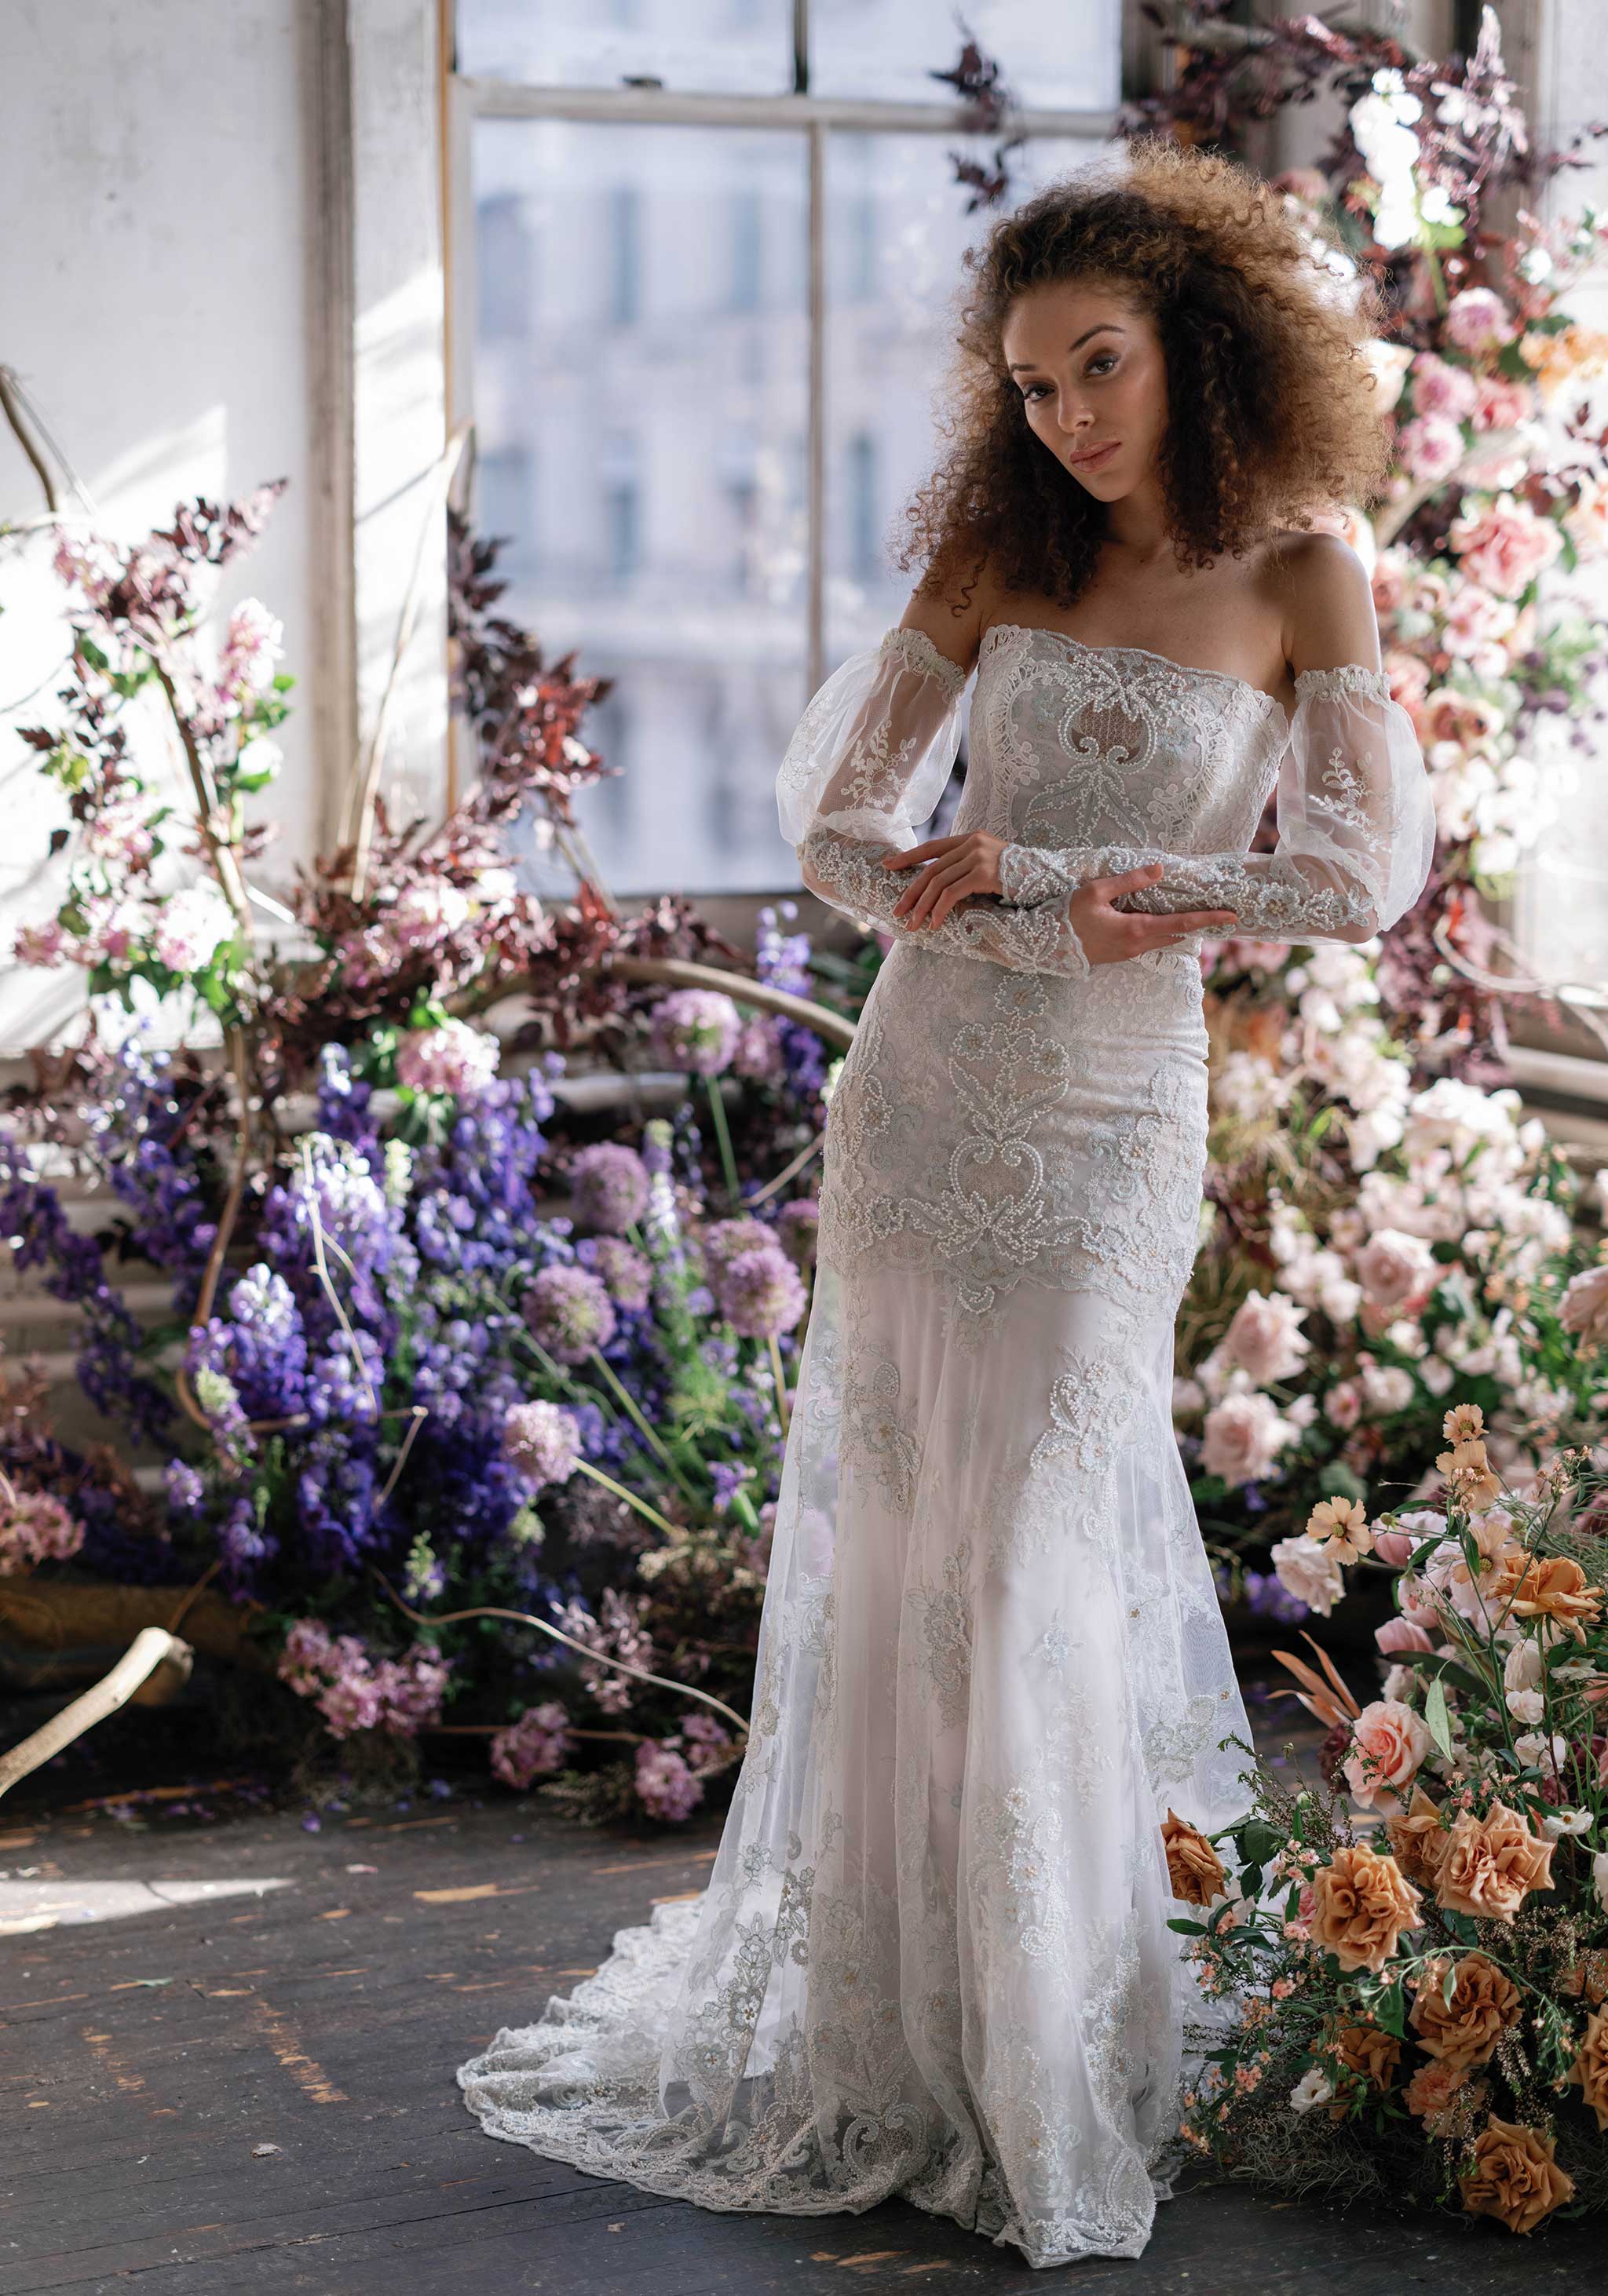 Aquamarine lace designer wedding dress by Claire Pettibone
